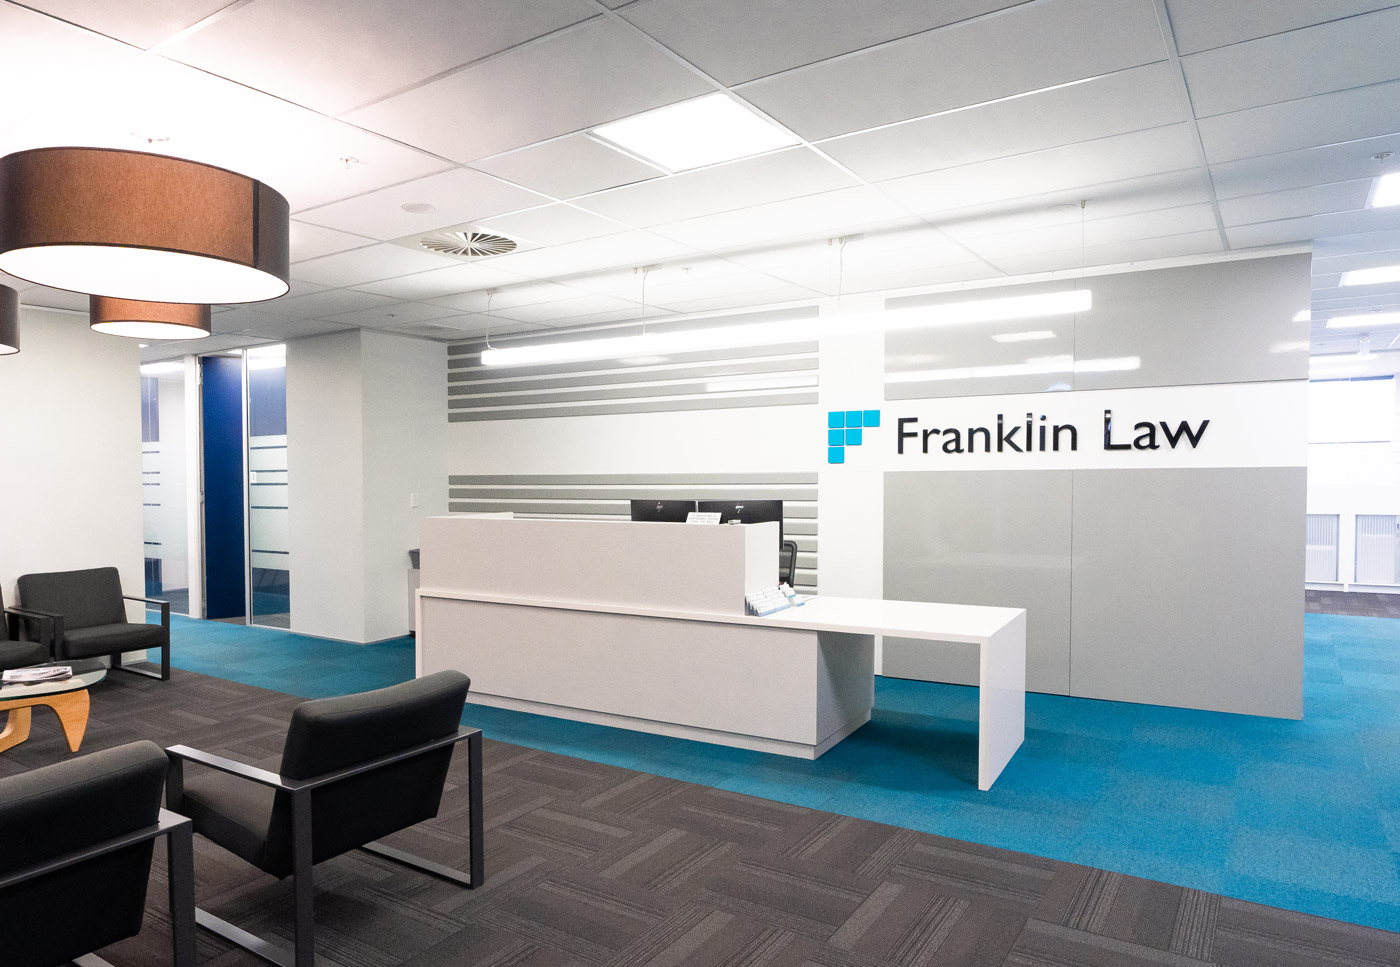 Franklin Law - Main Entrance Area